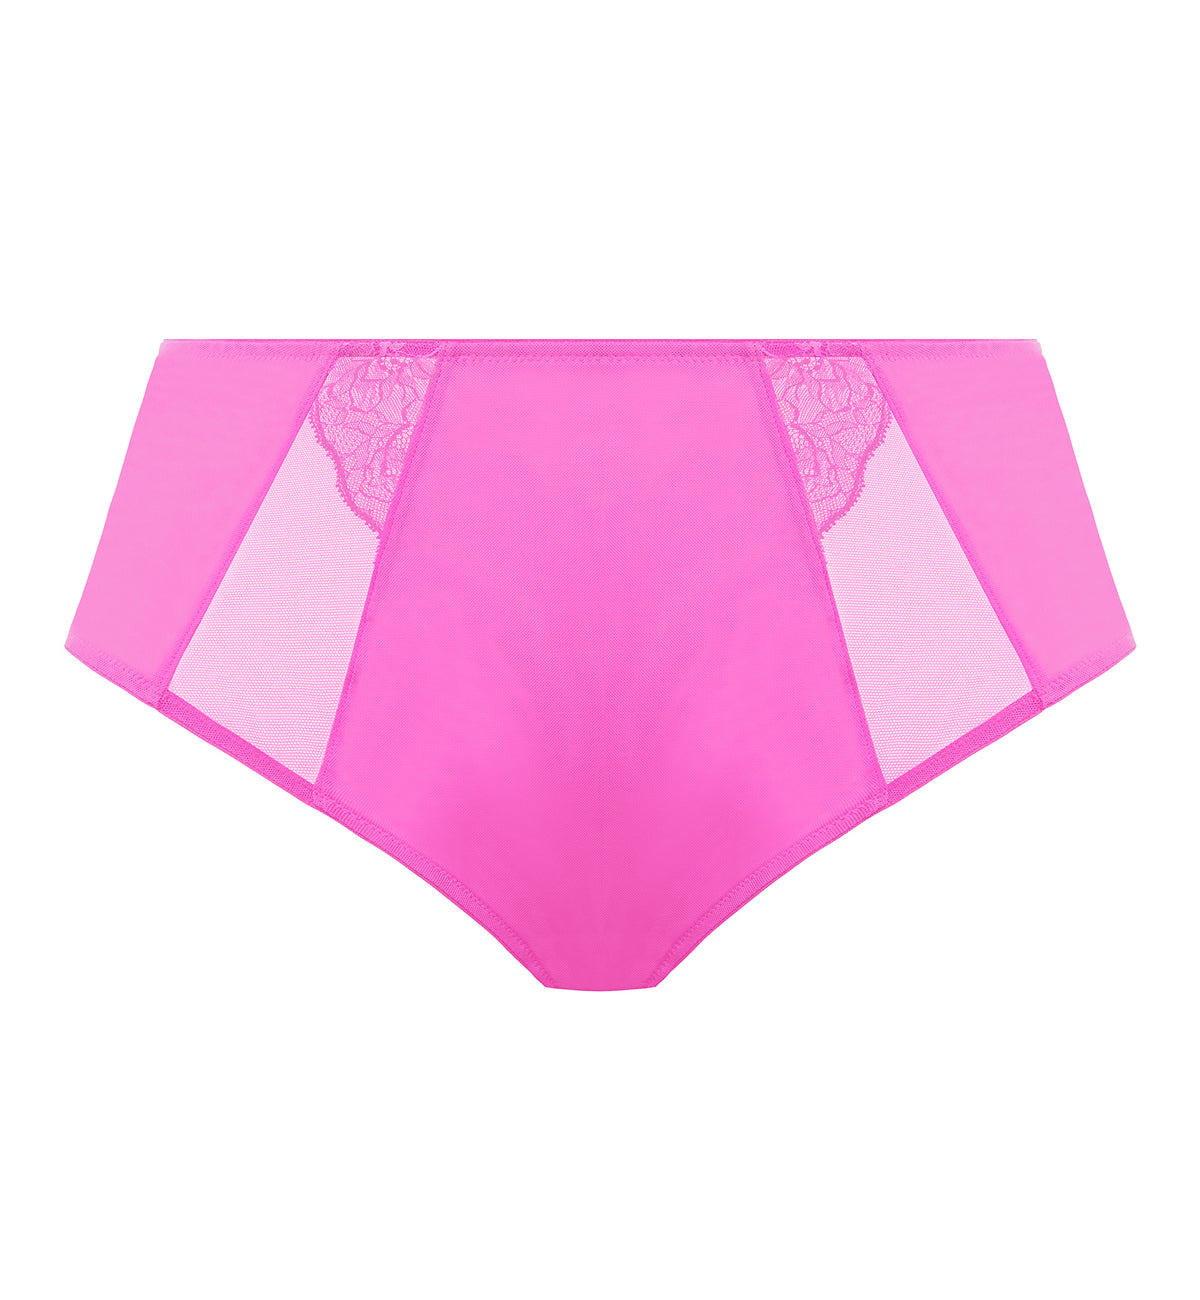 Elomi Brianna Full Panty Brief (8085),Medium,Very Pink - Very Pink,Medium